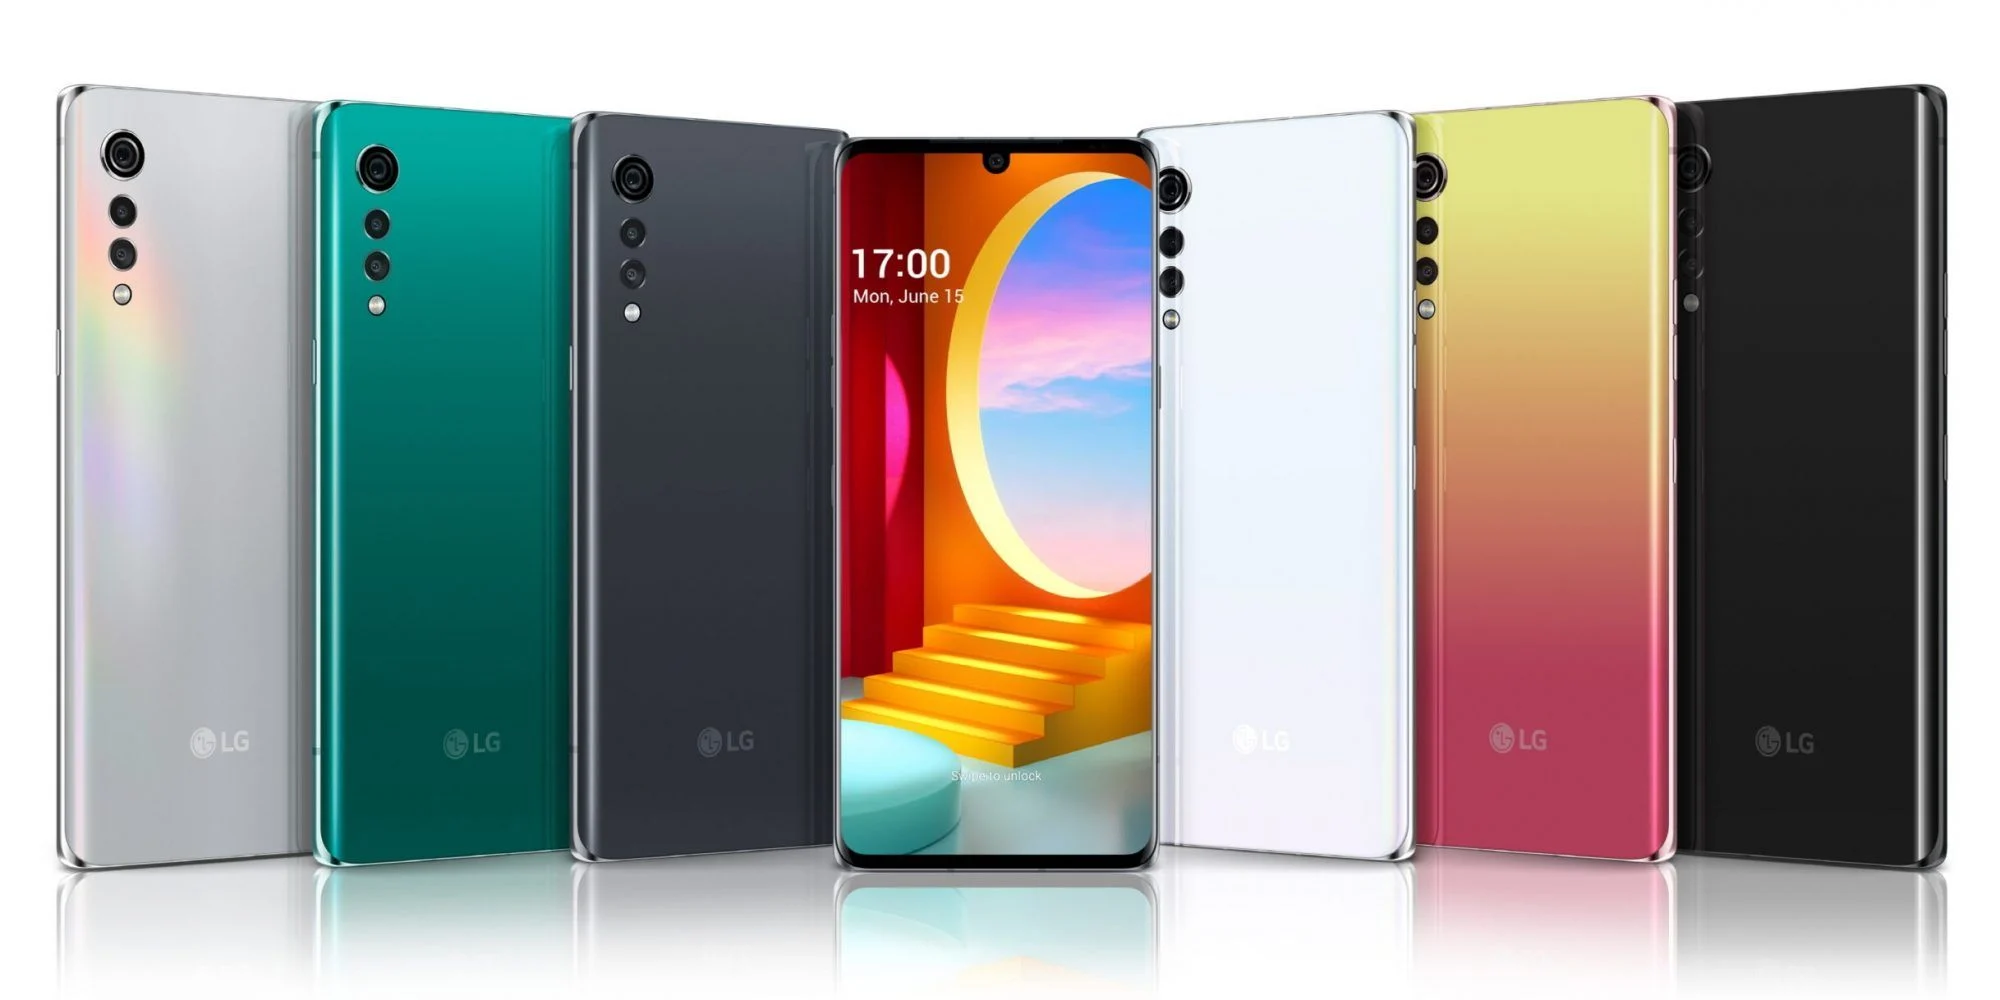 LG won't make smartphones anymore